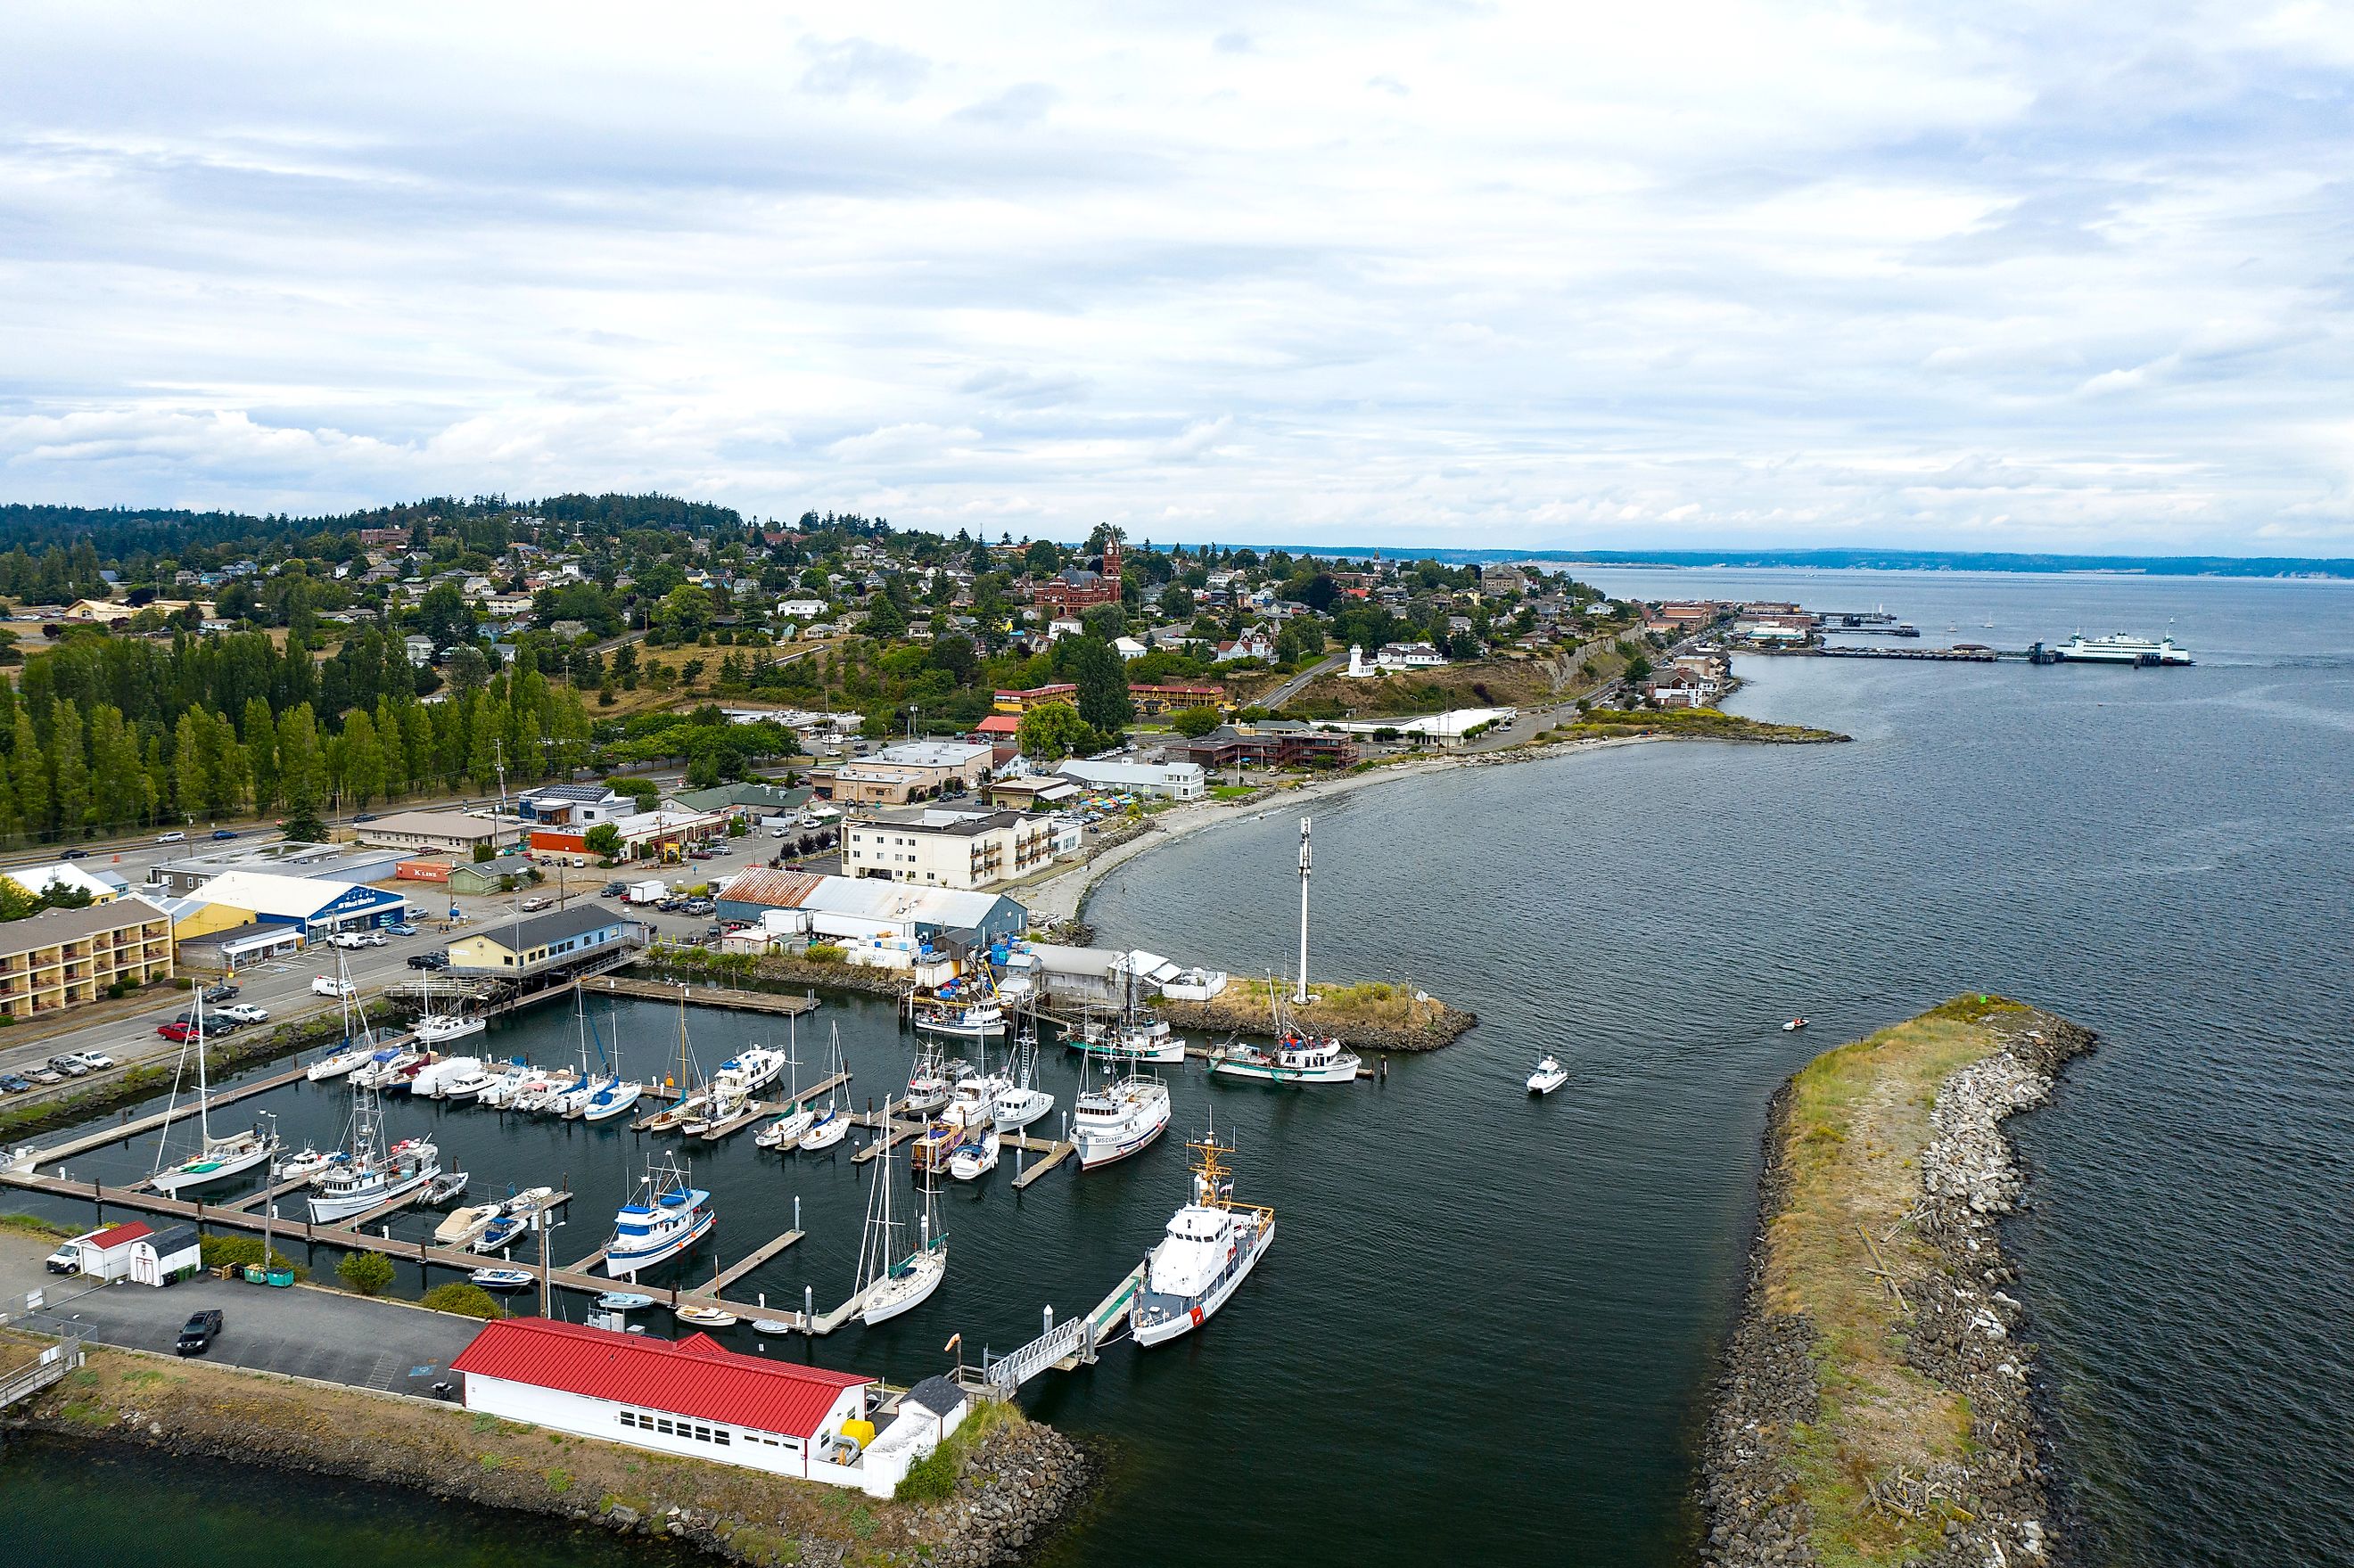 Aerial view of marina of Port Townsend. Editorial credit: Cascade Creatives / Shutterstock.com.